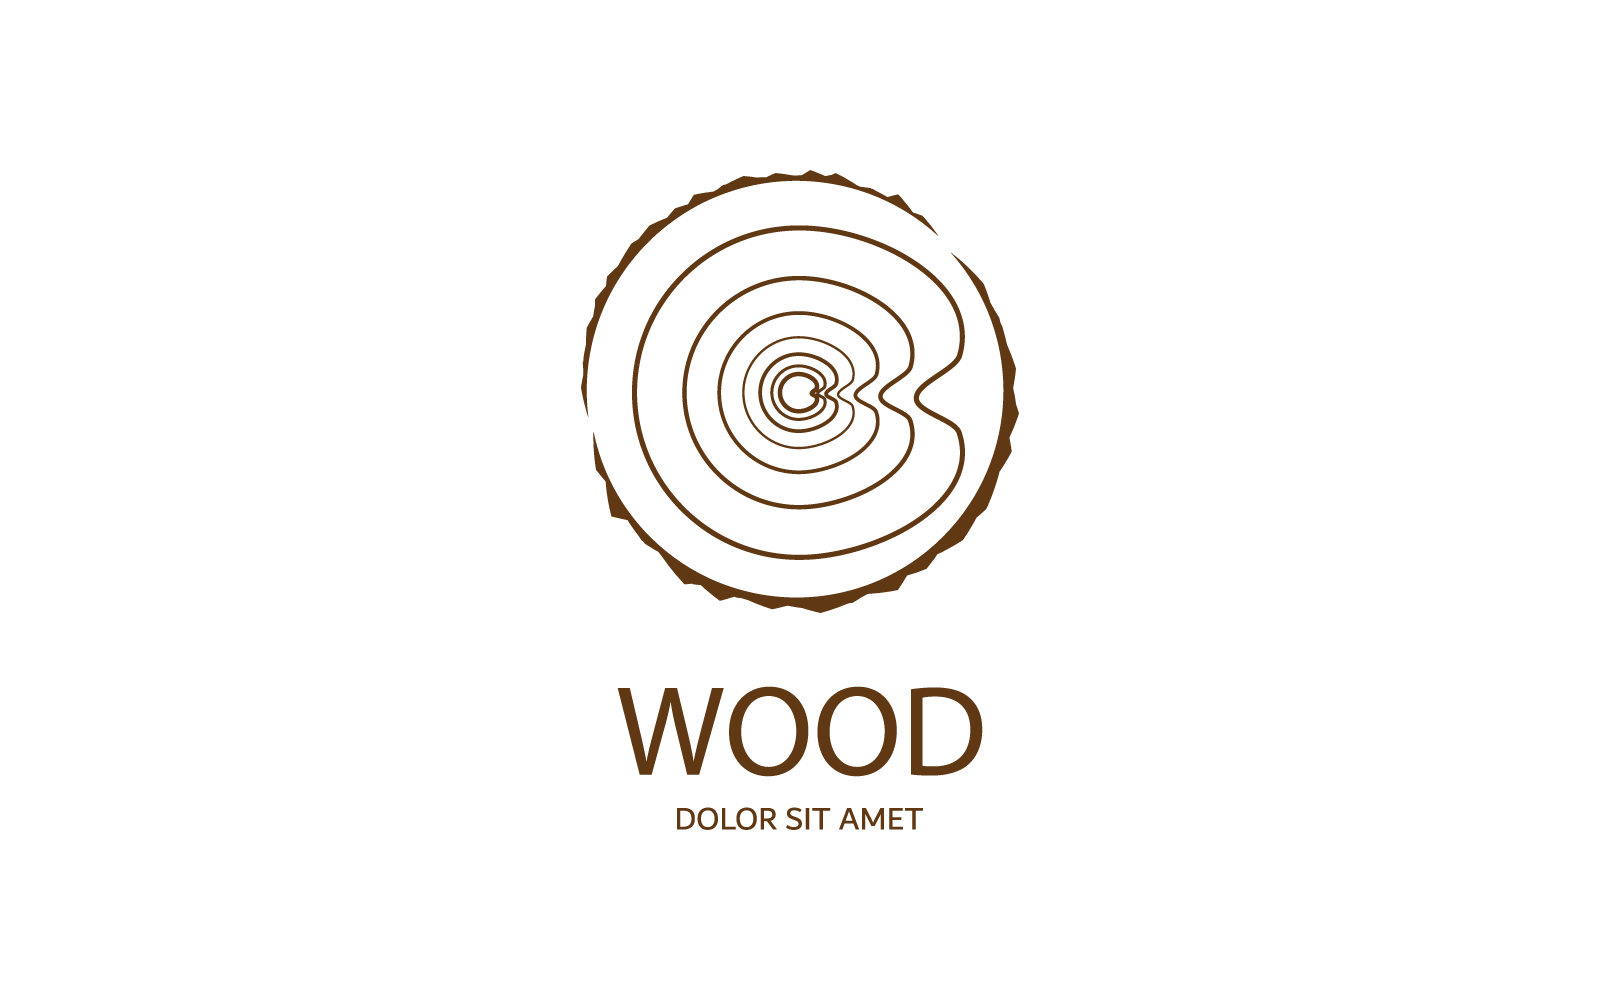 Wood logo vector illustration flat design